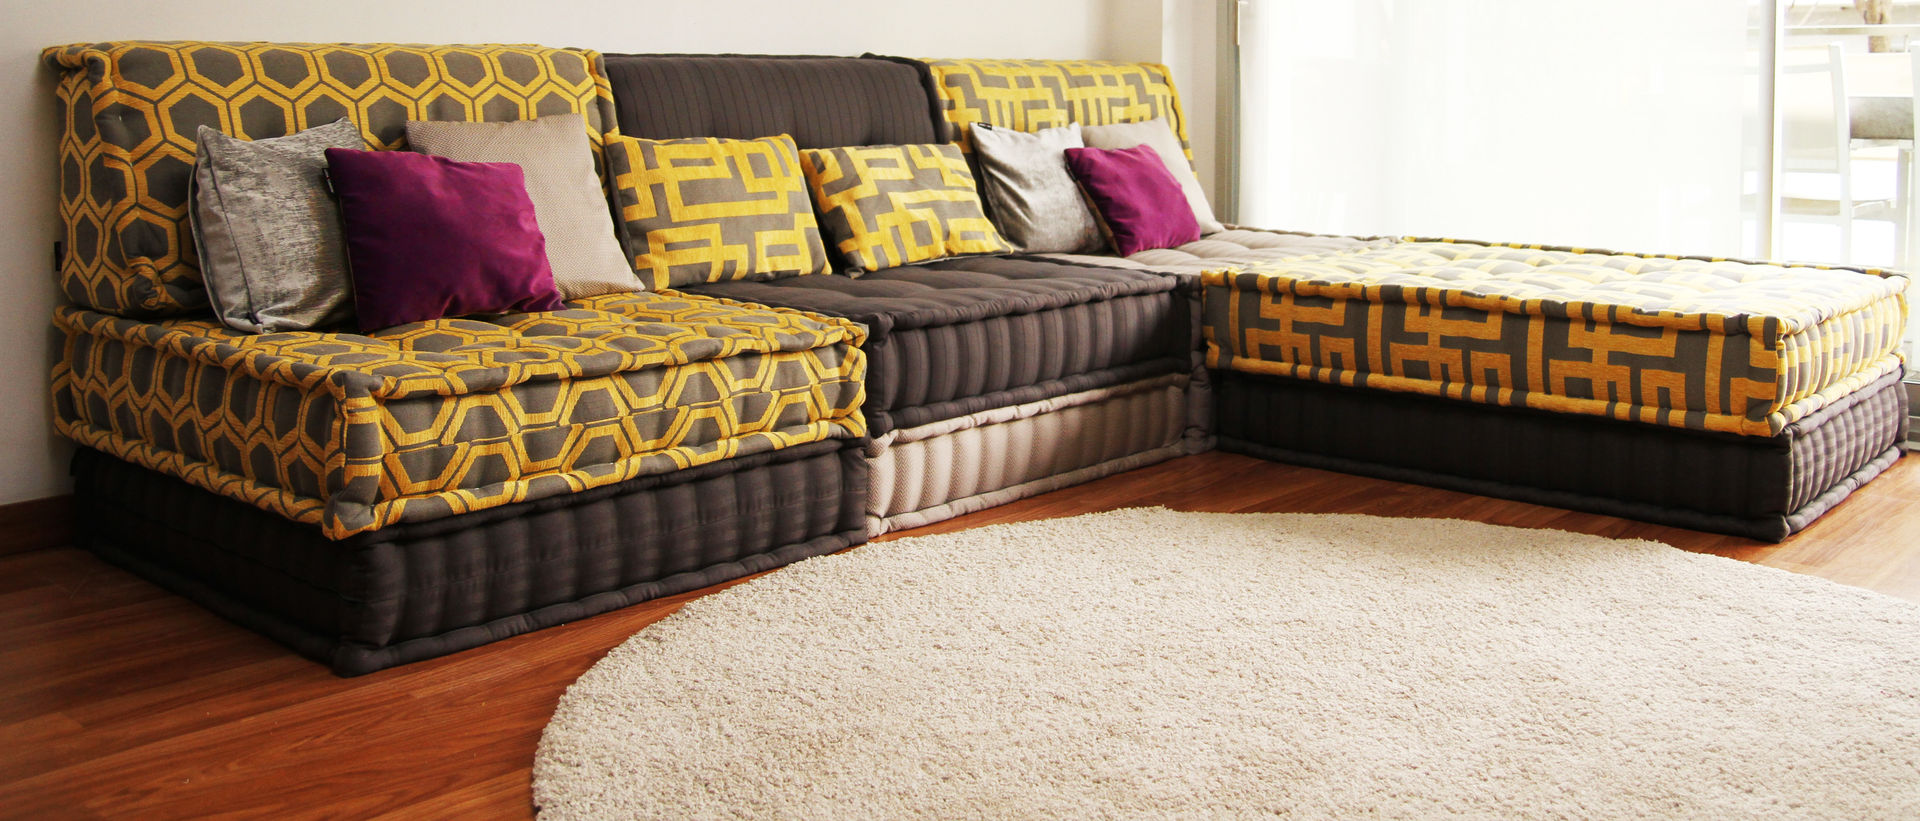 Sofa modulable modelo "Craft" - Girona , LOOK & CUSHION LOOK & CUSHION Living room Sofas & armchairs